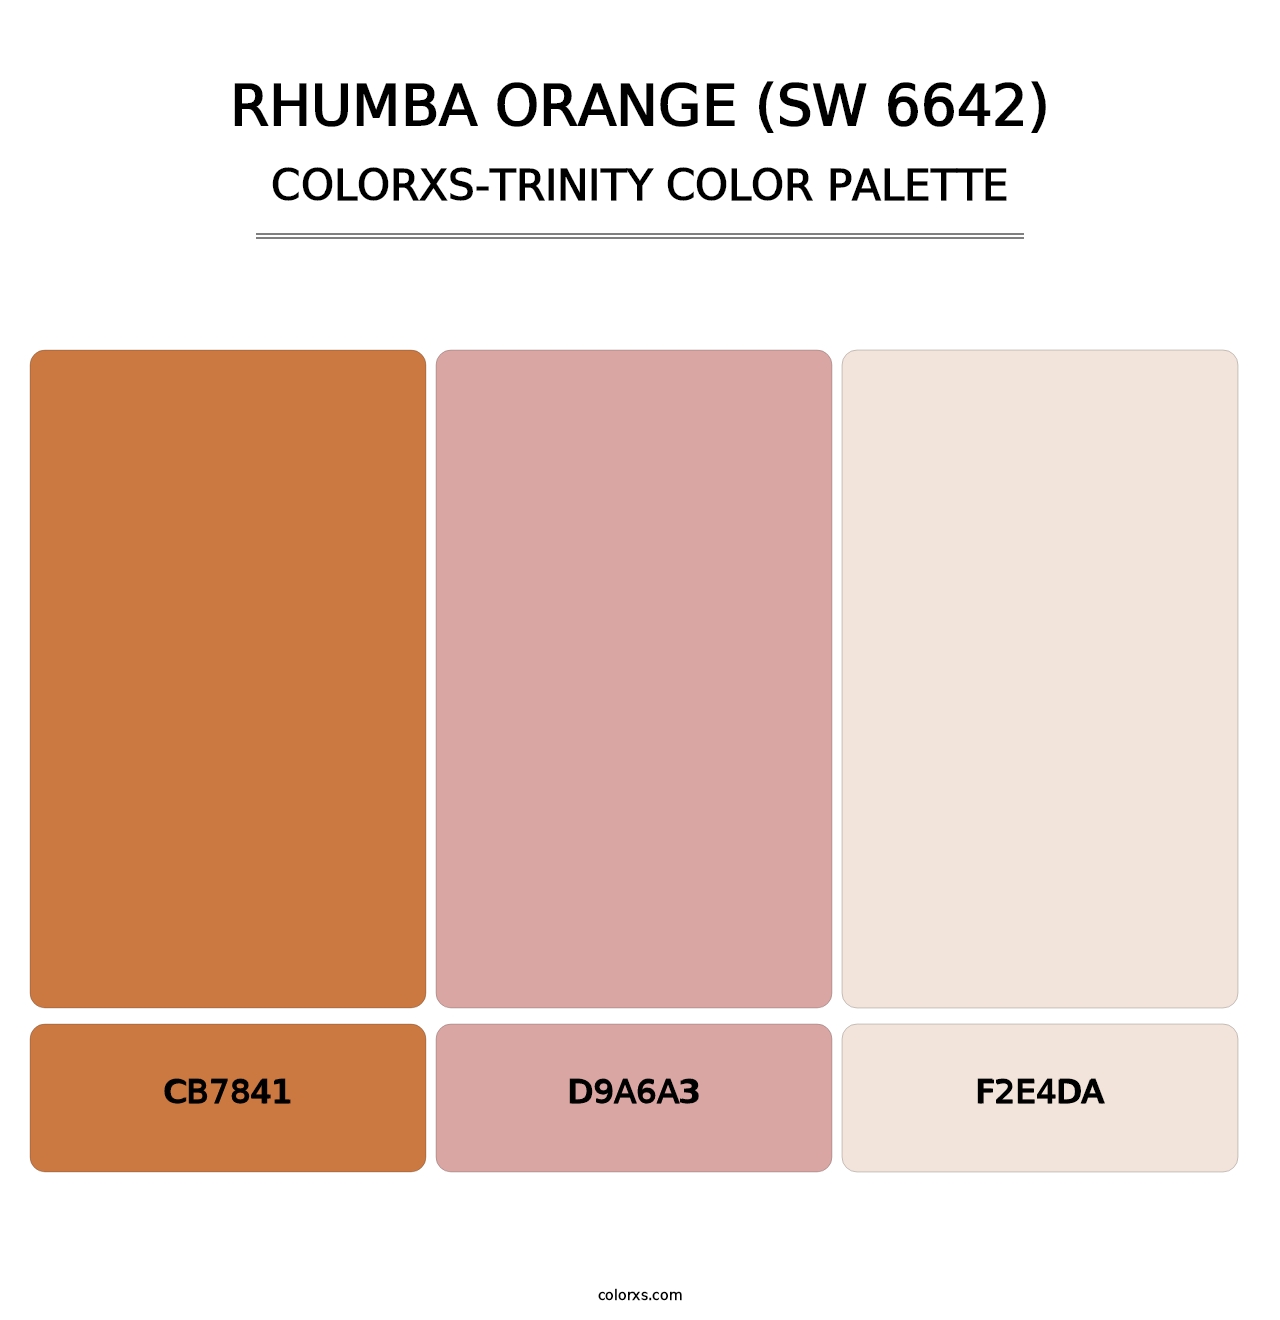 Rhumba Orange (SW 6642) - Colorxs Trinity Palette